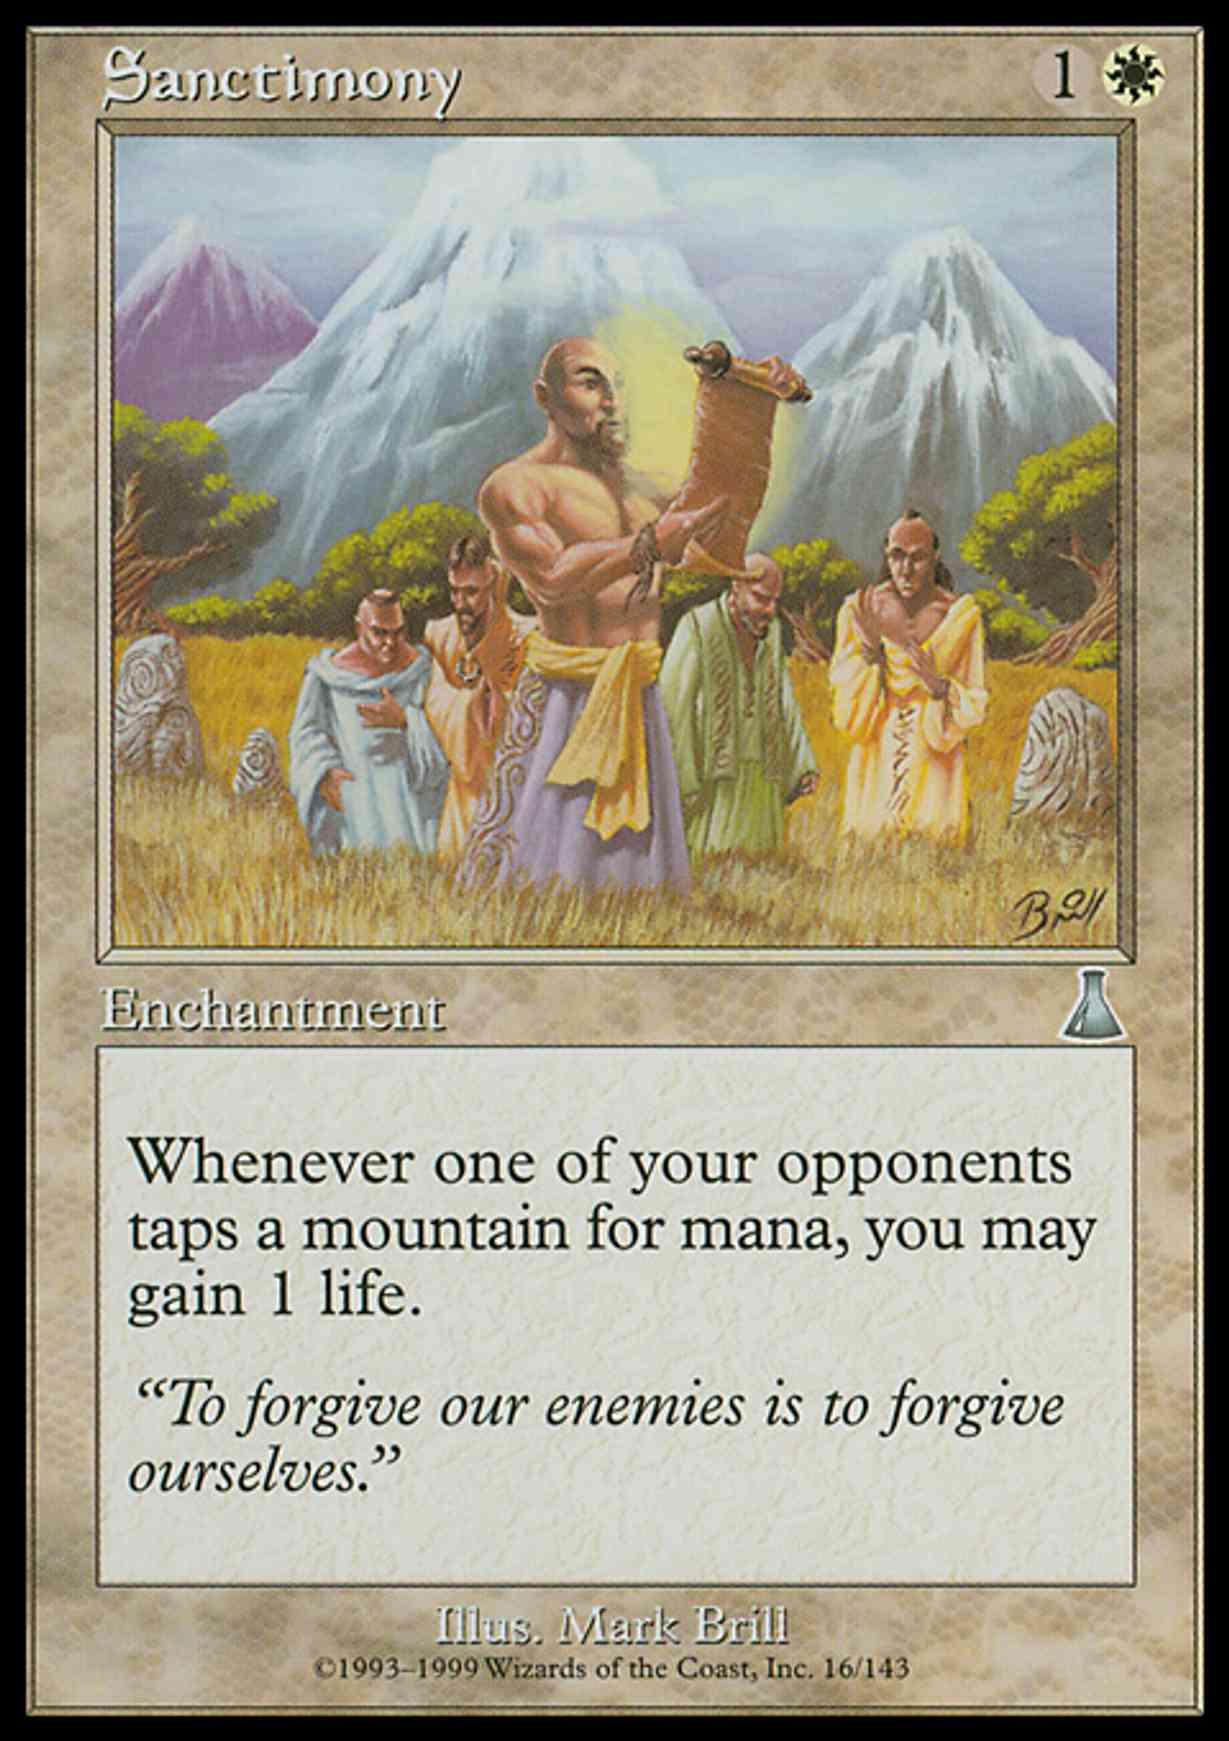 Sanctimony magic card front